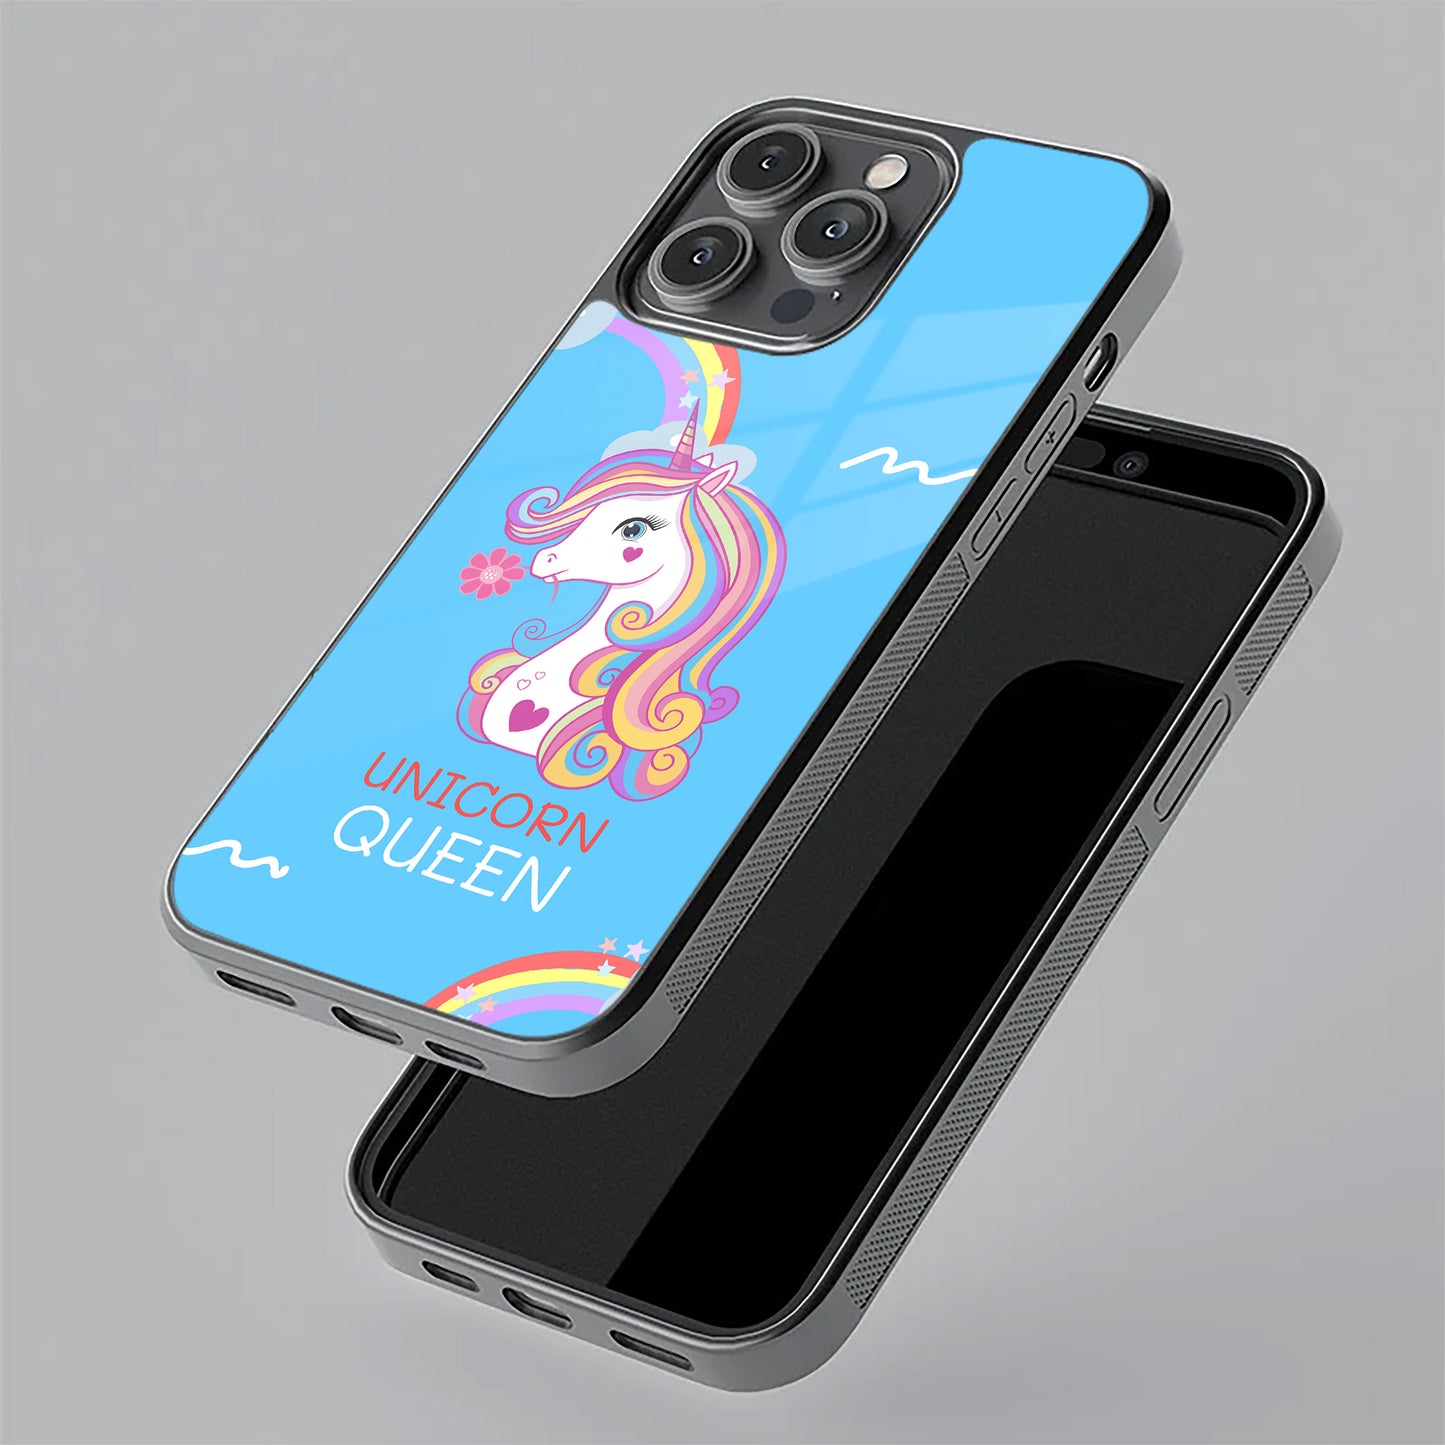 Blue Unicorn Queen Glass Phone Case For Redmi/Xiaomi